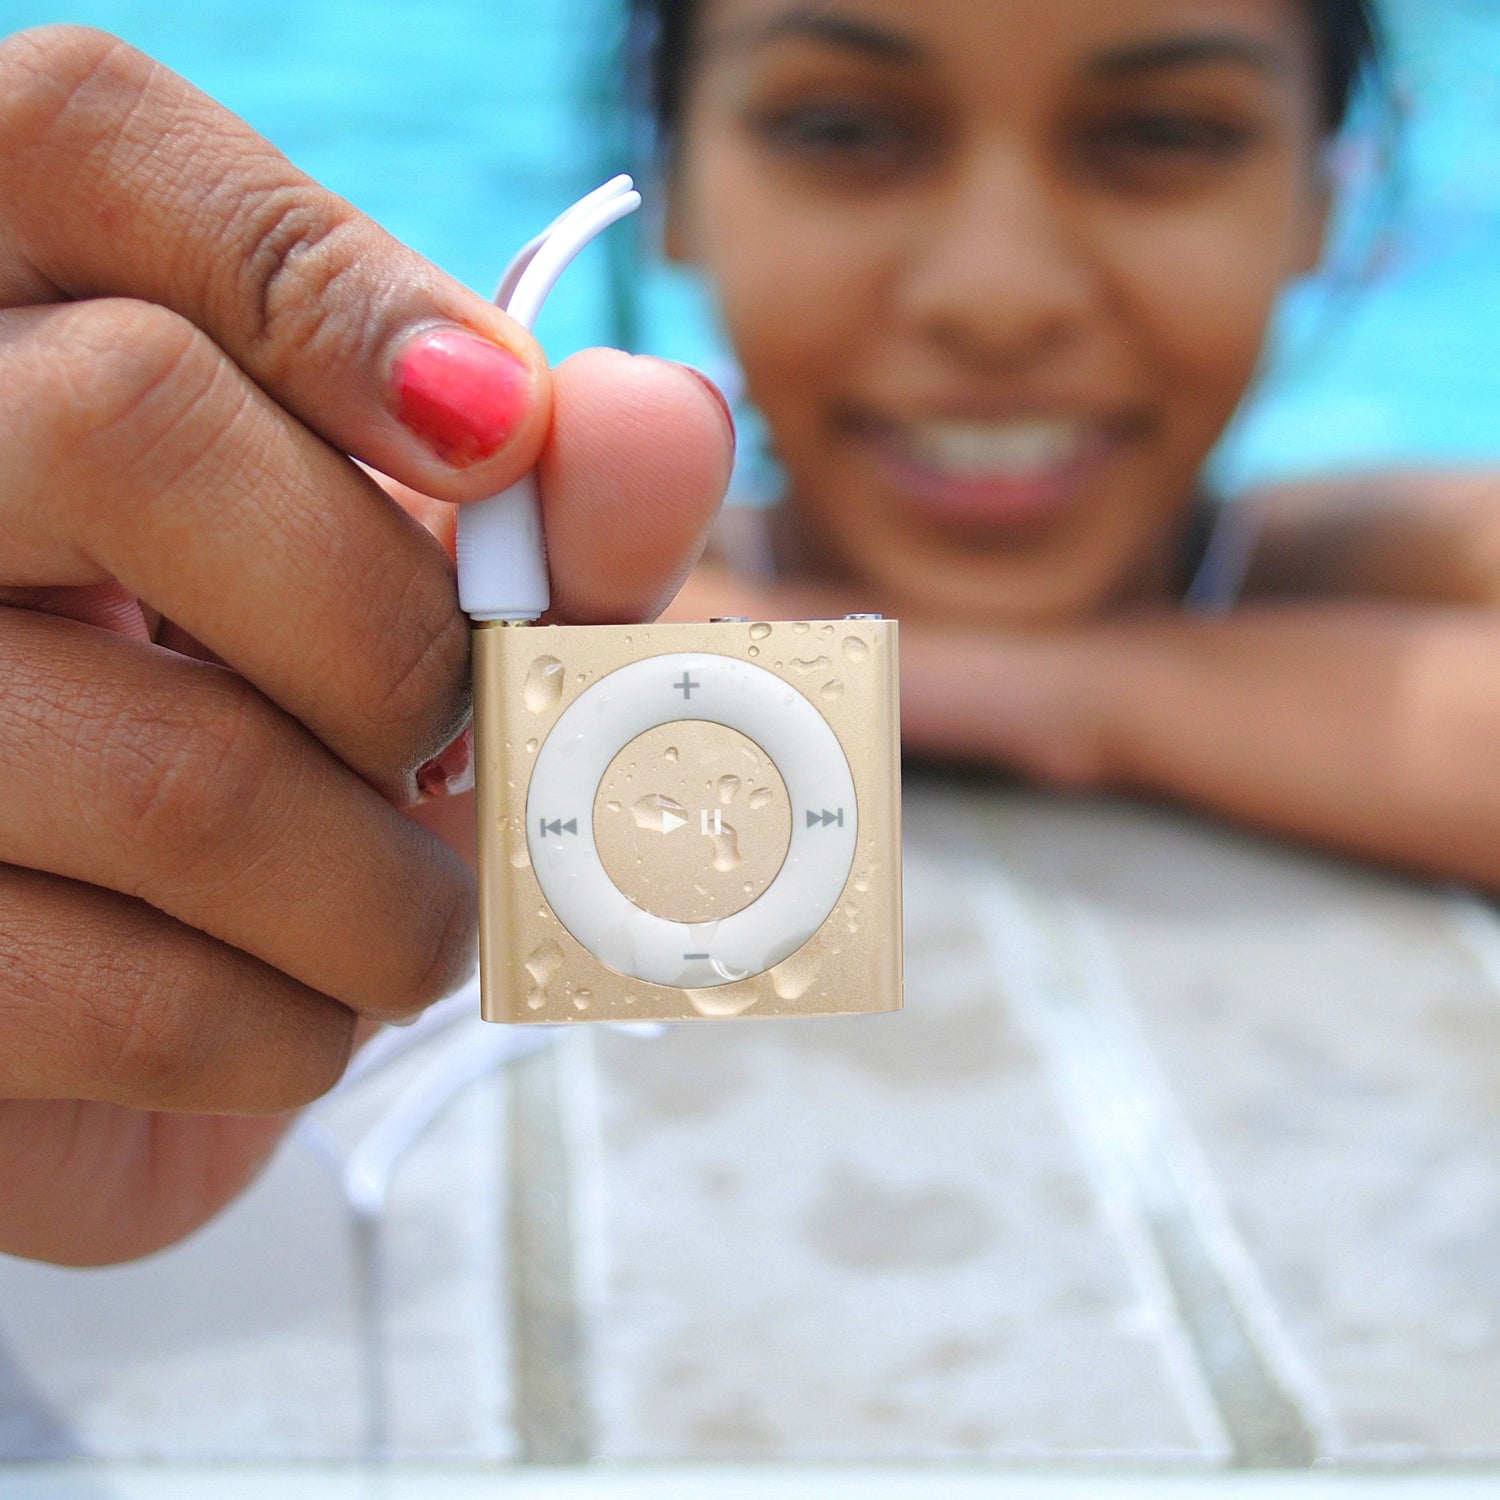 Waterproof iPod Shuffle